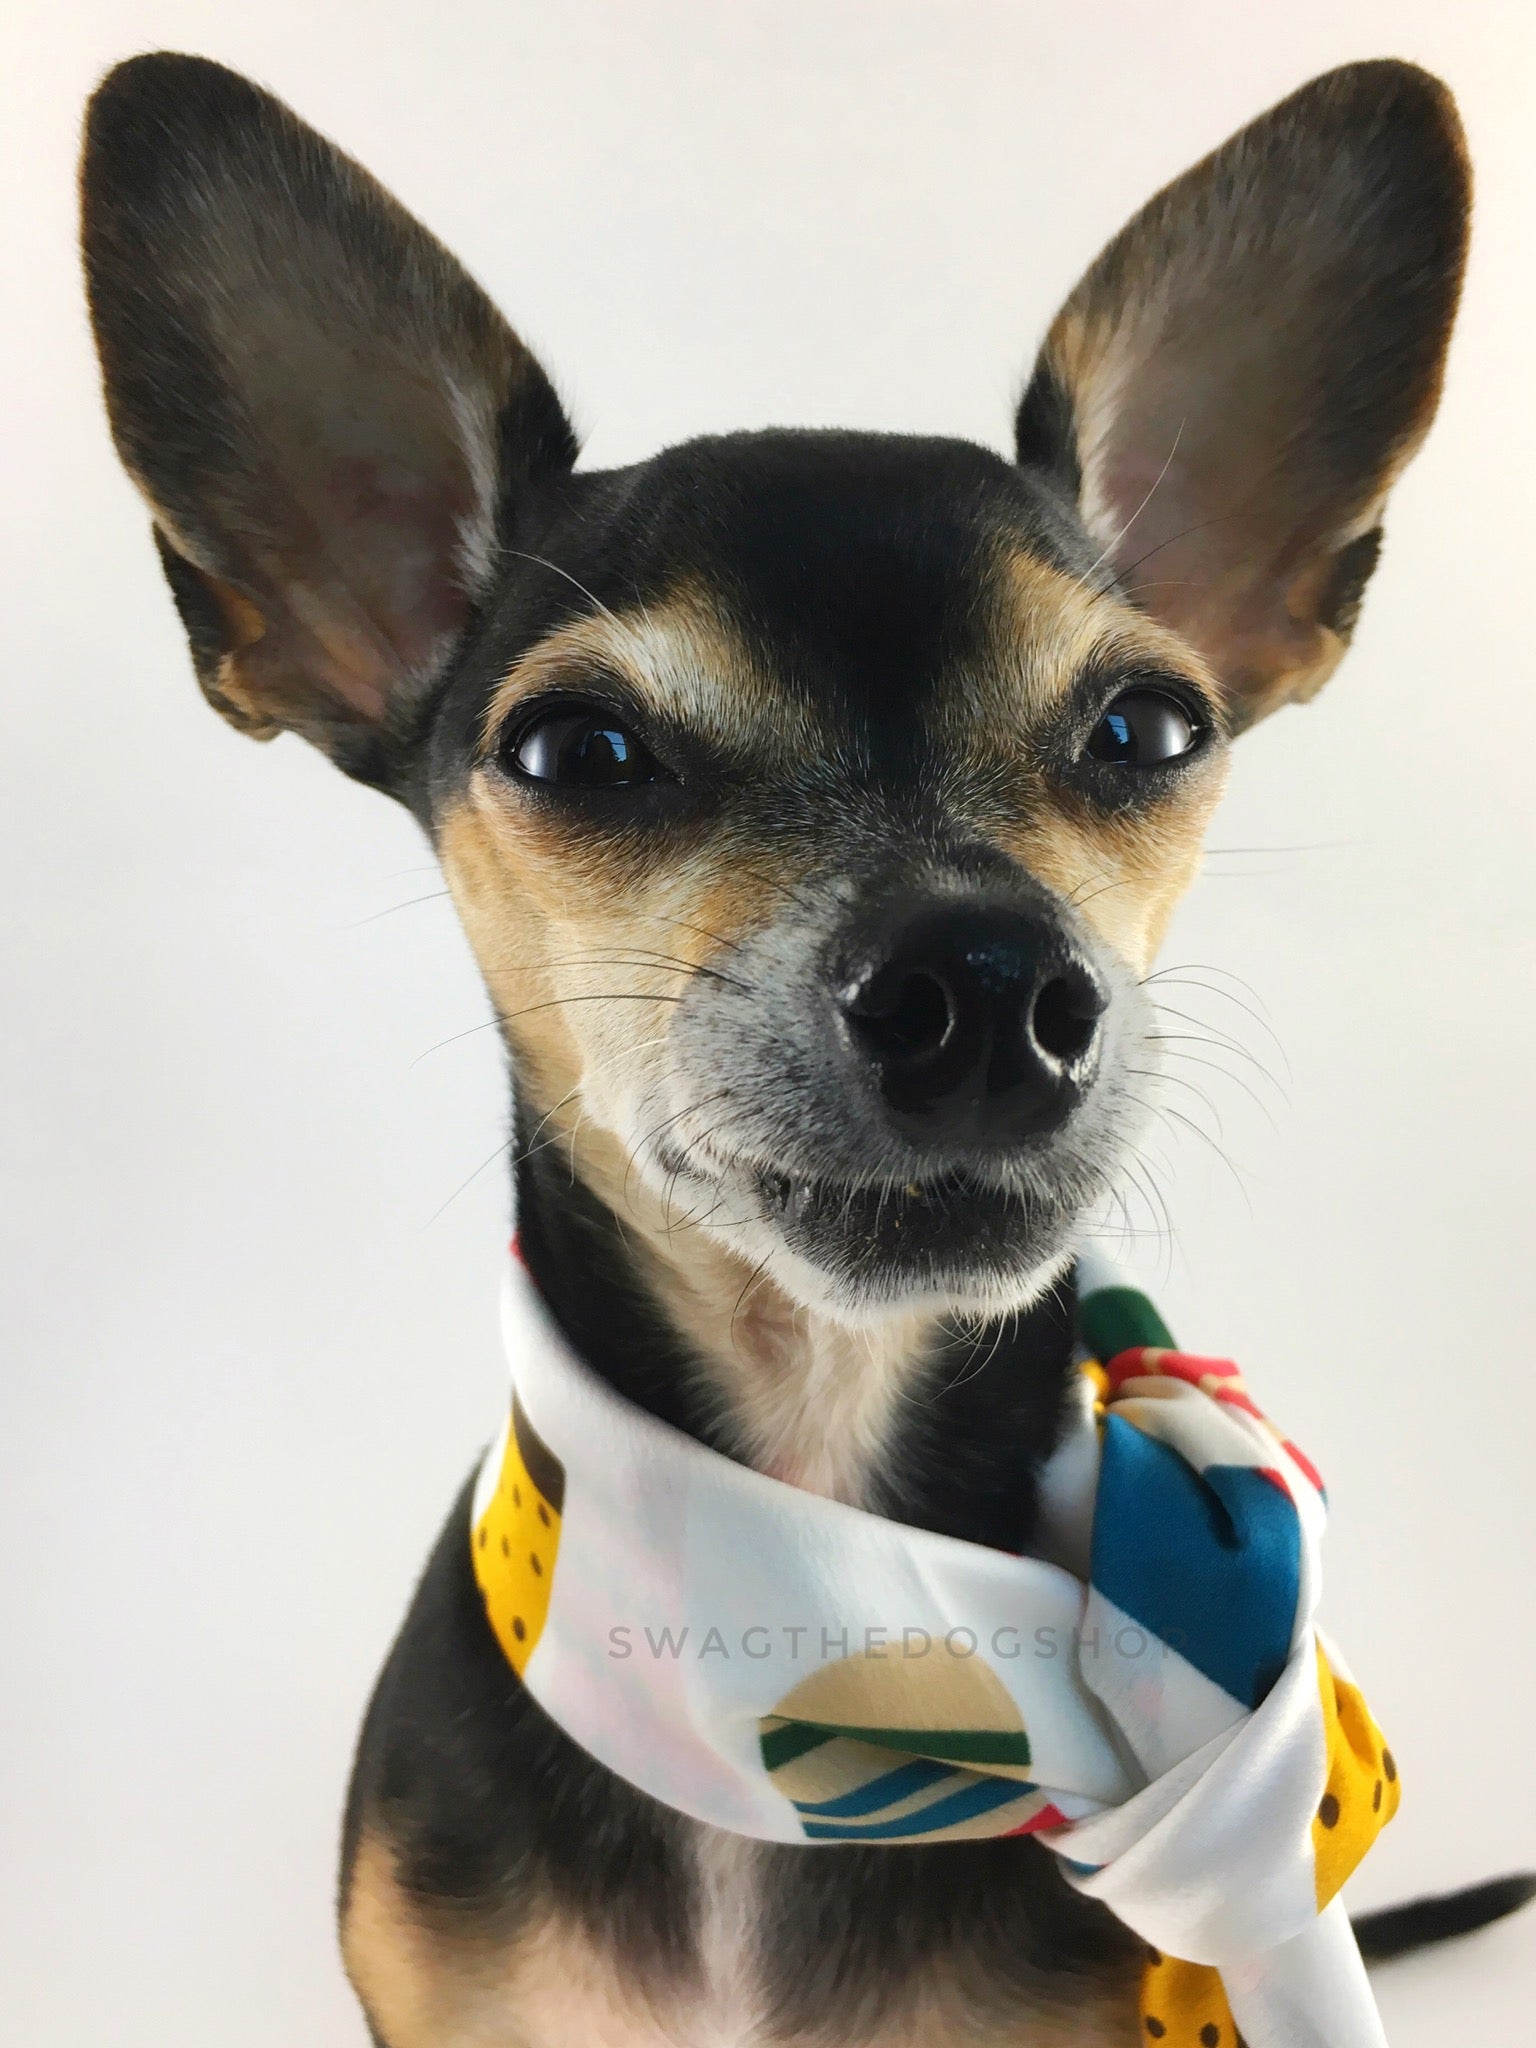 Rock Your Socks Swagdana Scarf - Bust of Cute Chihuahua Wearing Swagdana Scarf as Neckerchief. Dog Bandana. Dog Scarf.